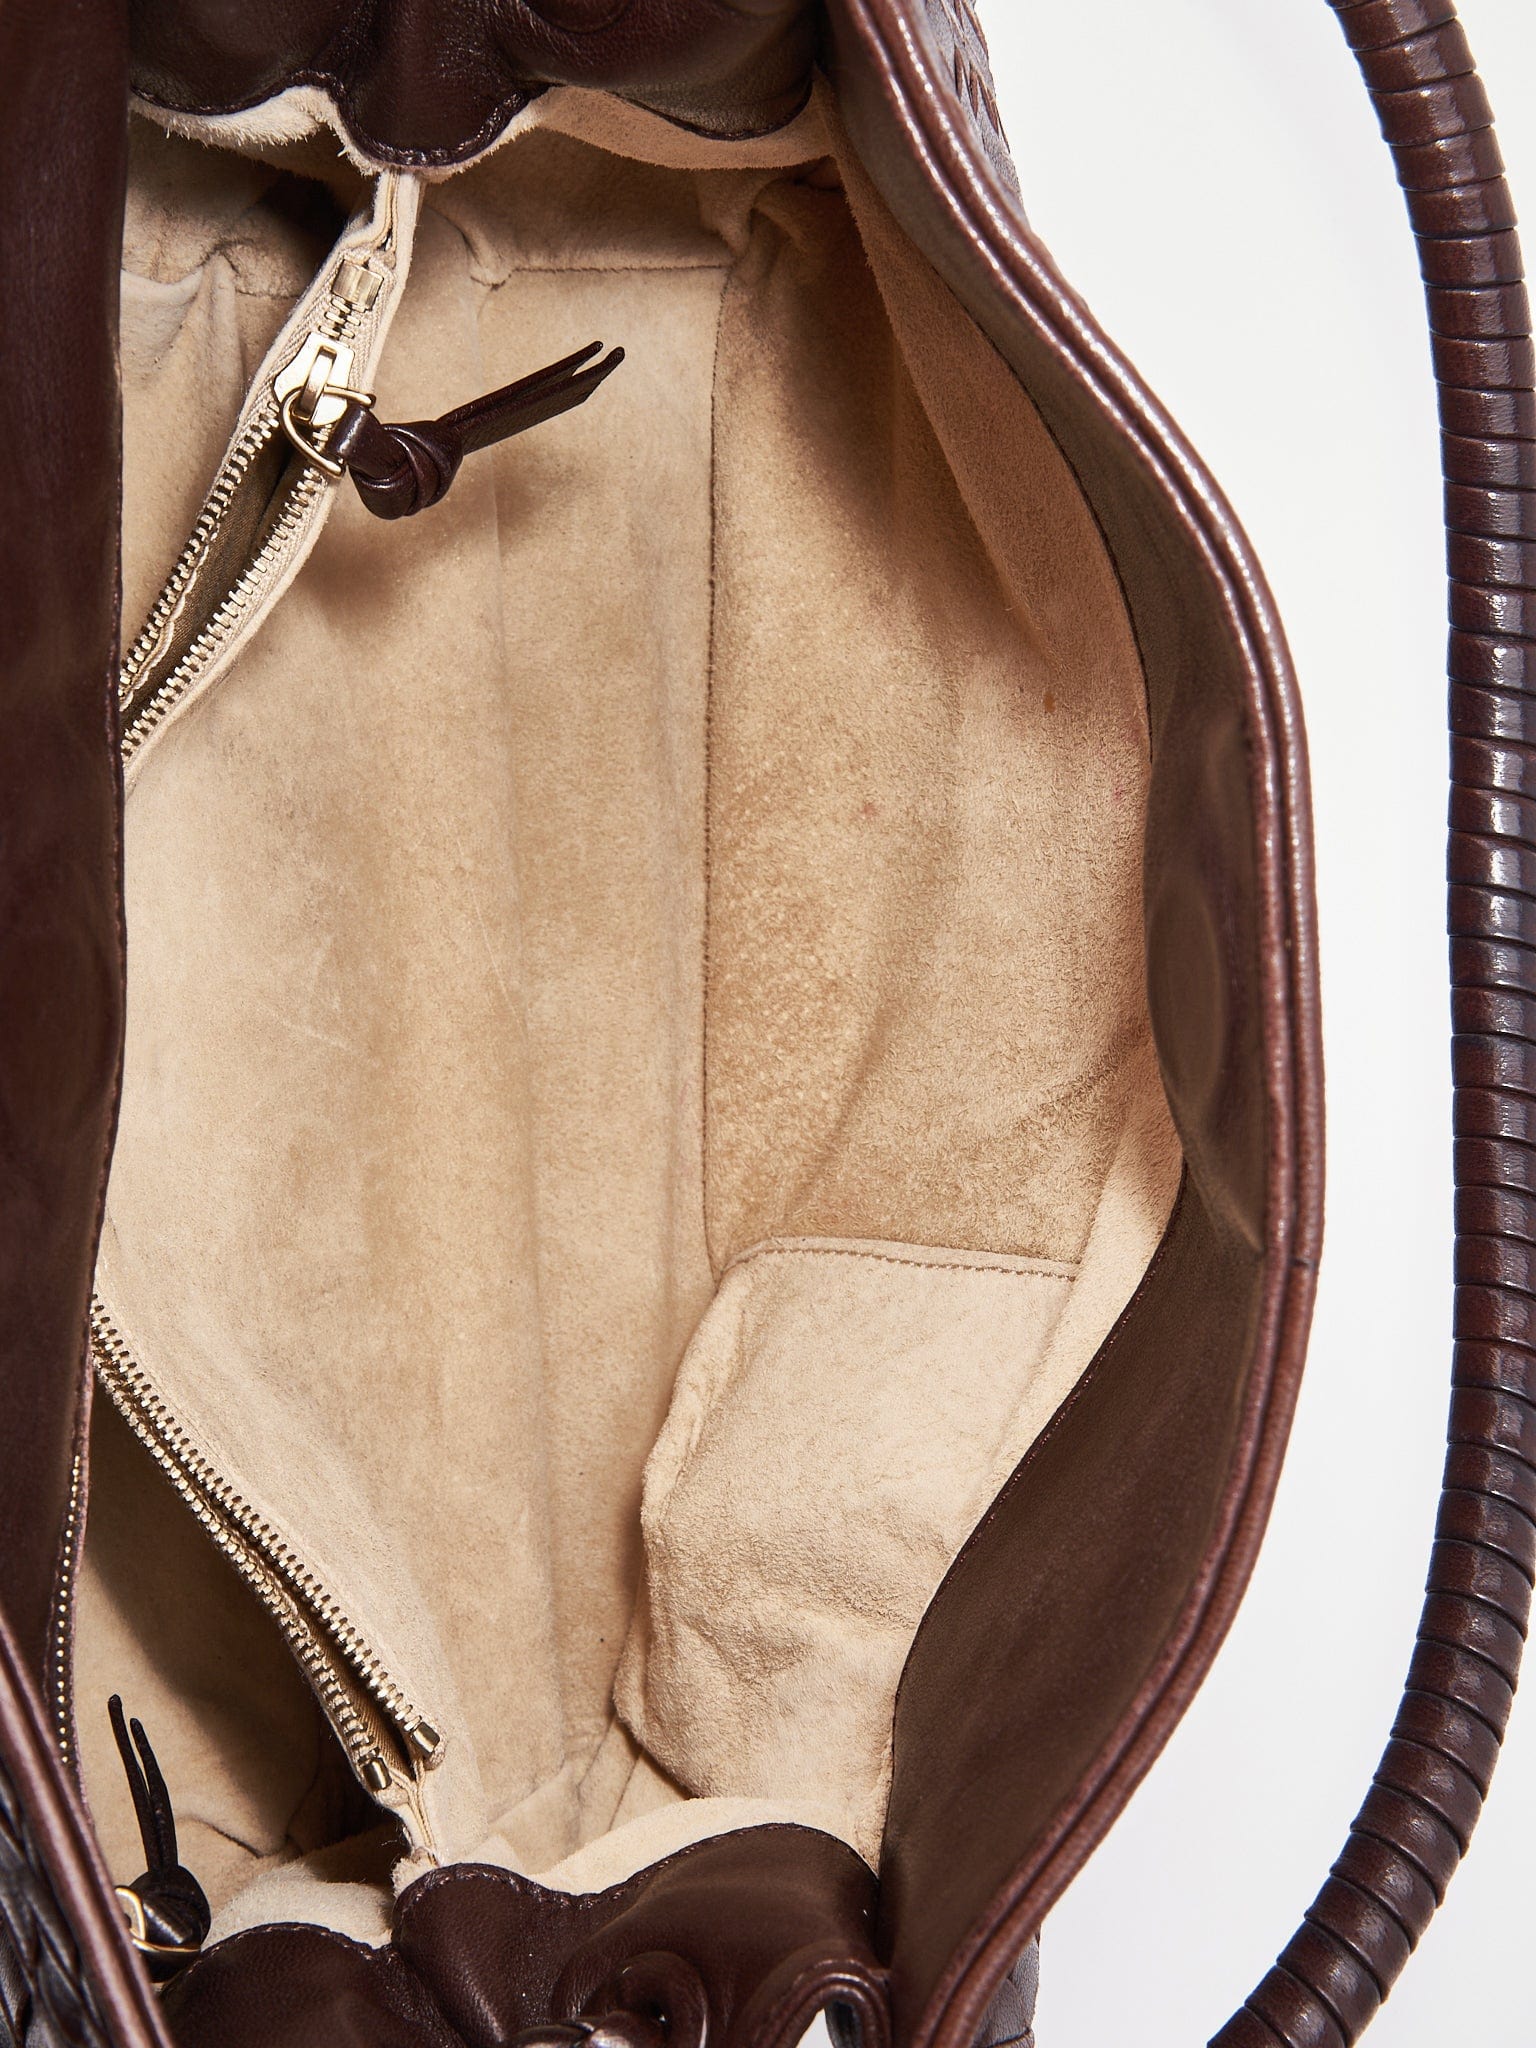 Bottega Veneta Intrecciato Brown Leather Shoulder Bag